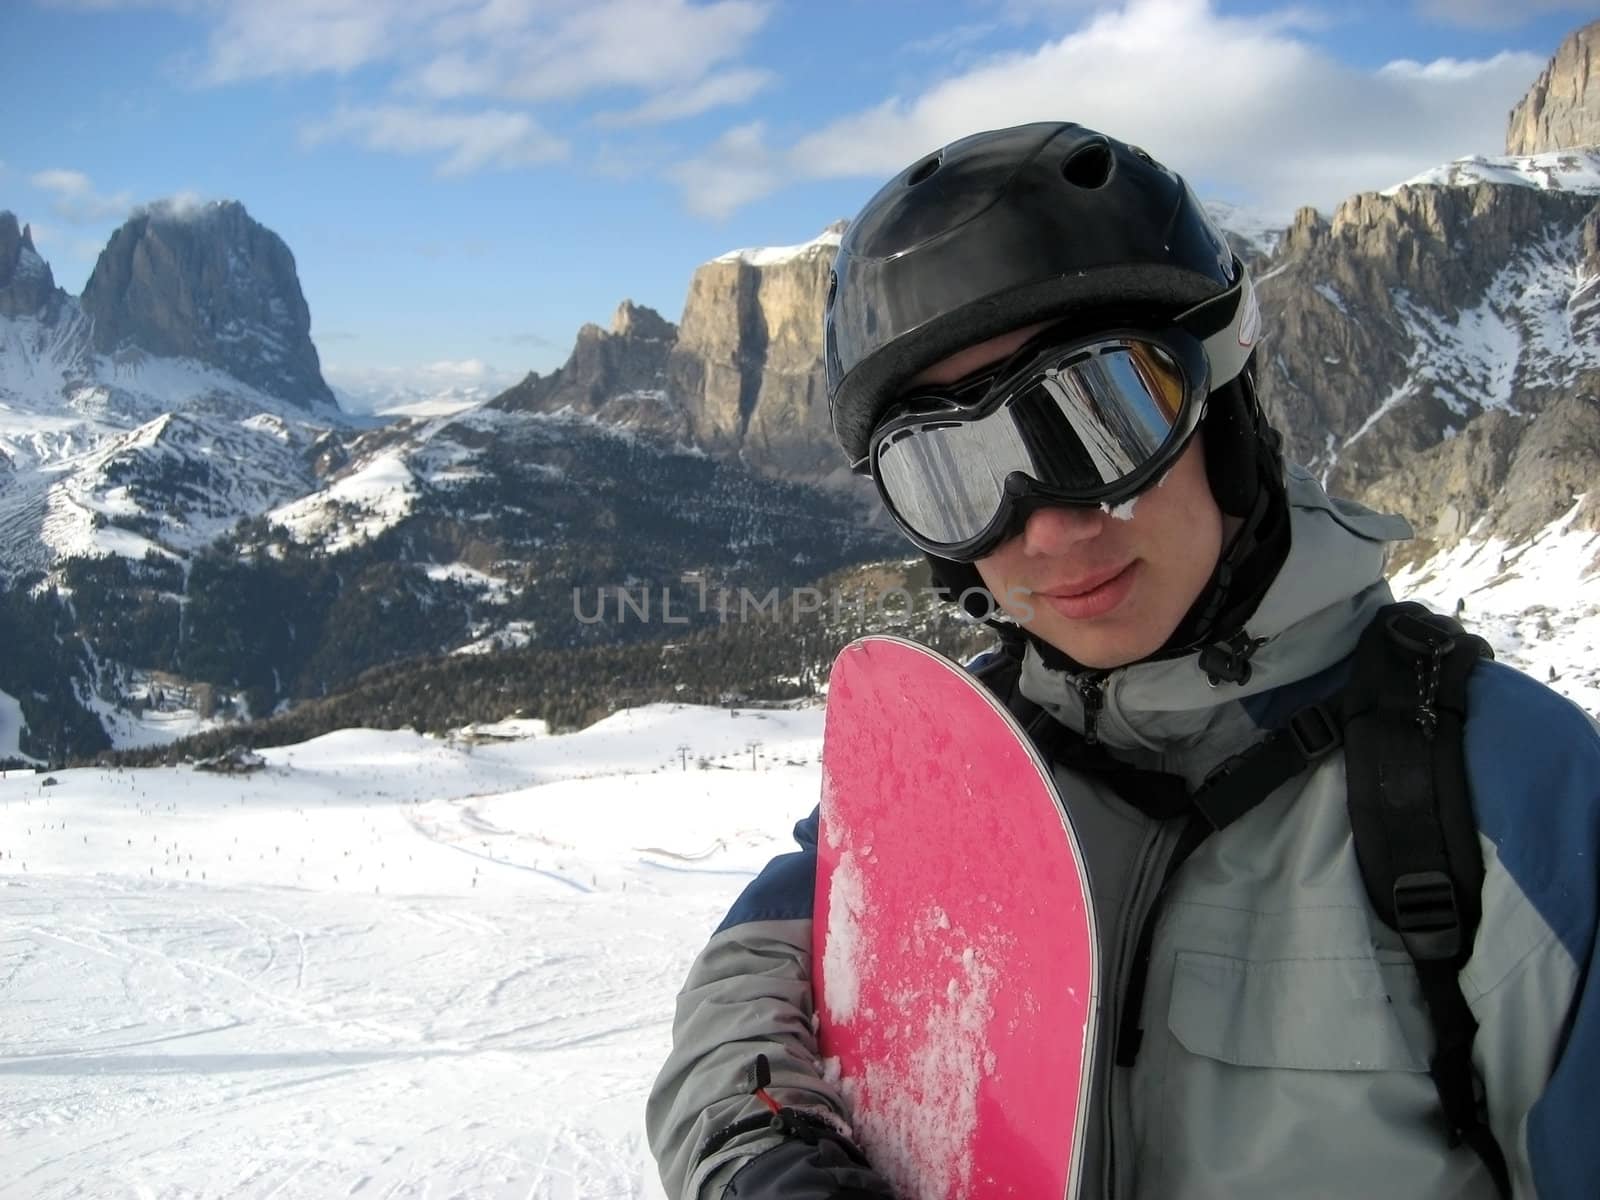 Snowboarder by leeser